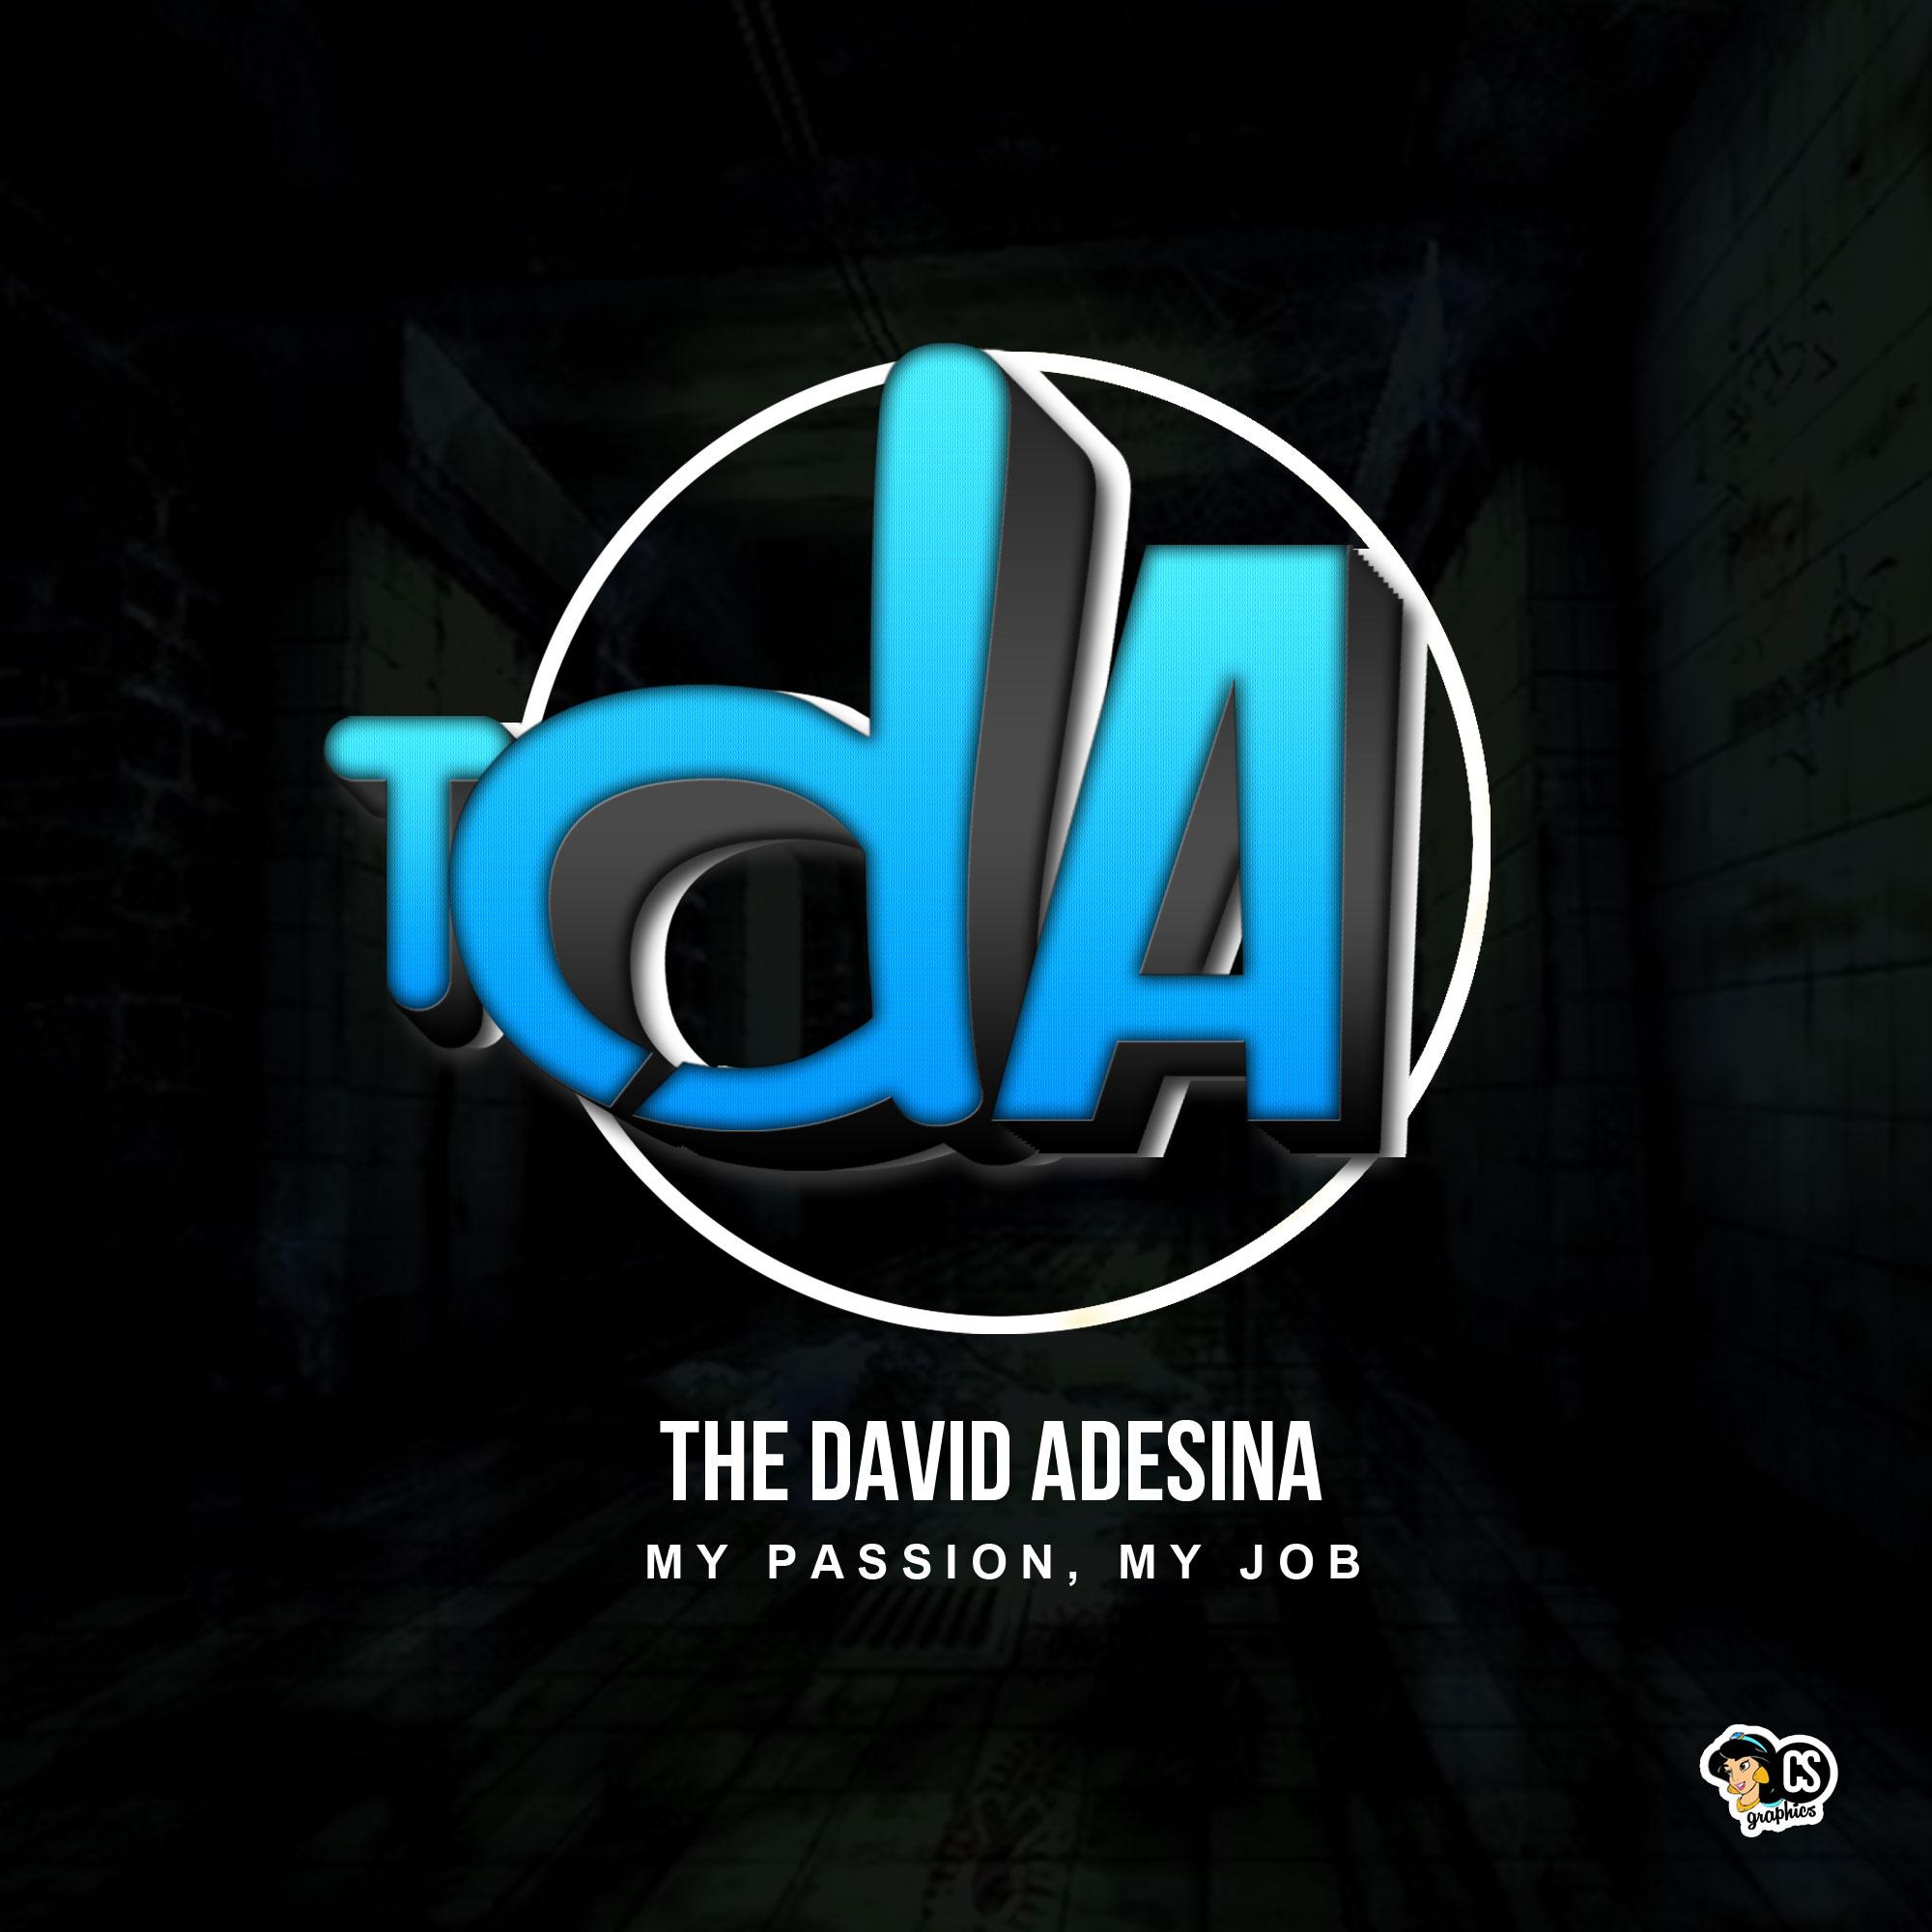 The David Adesina's Blog